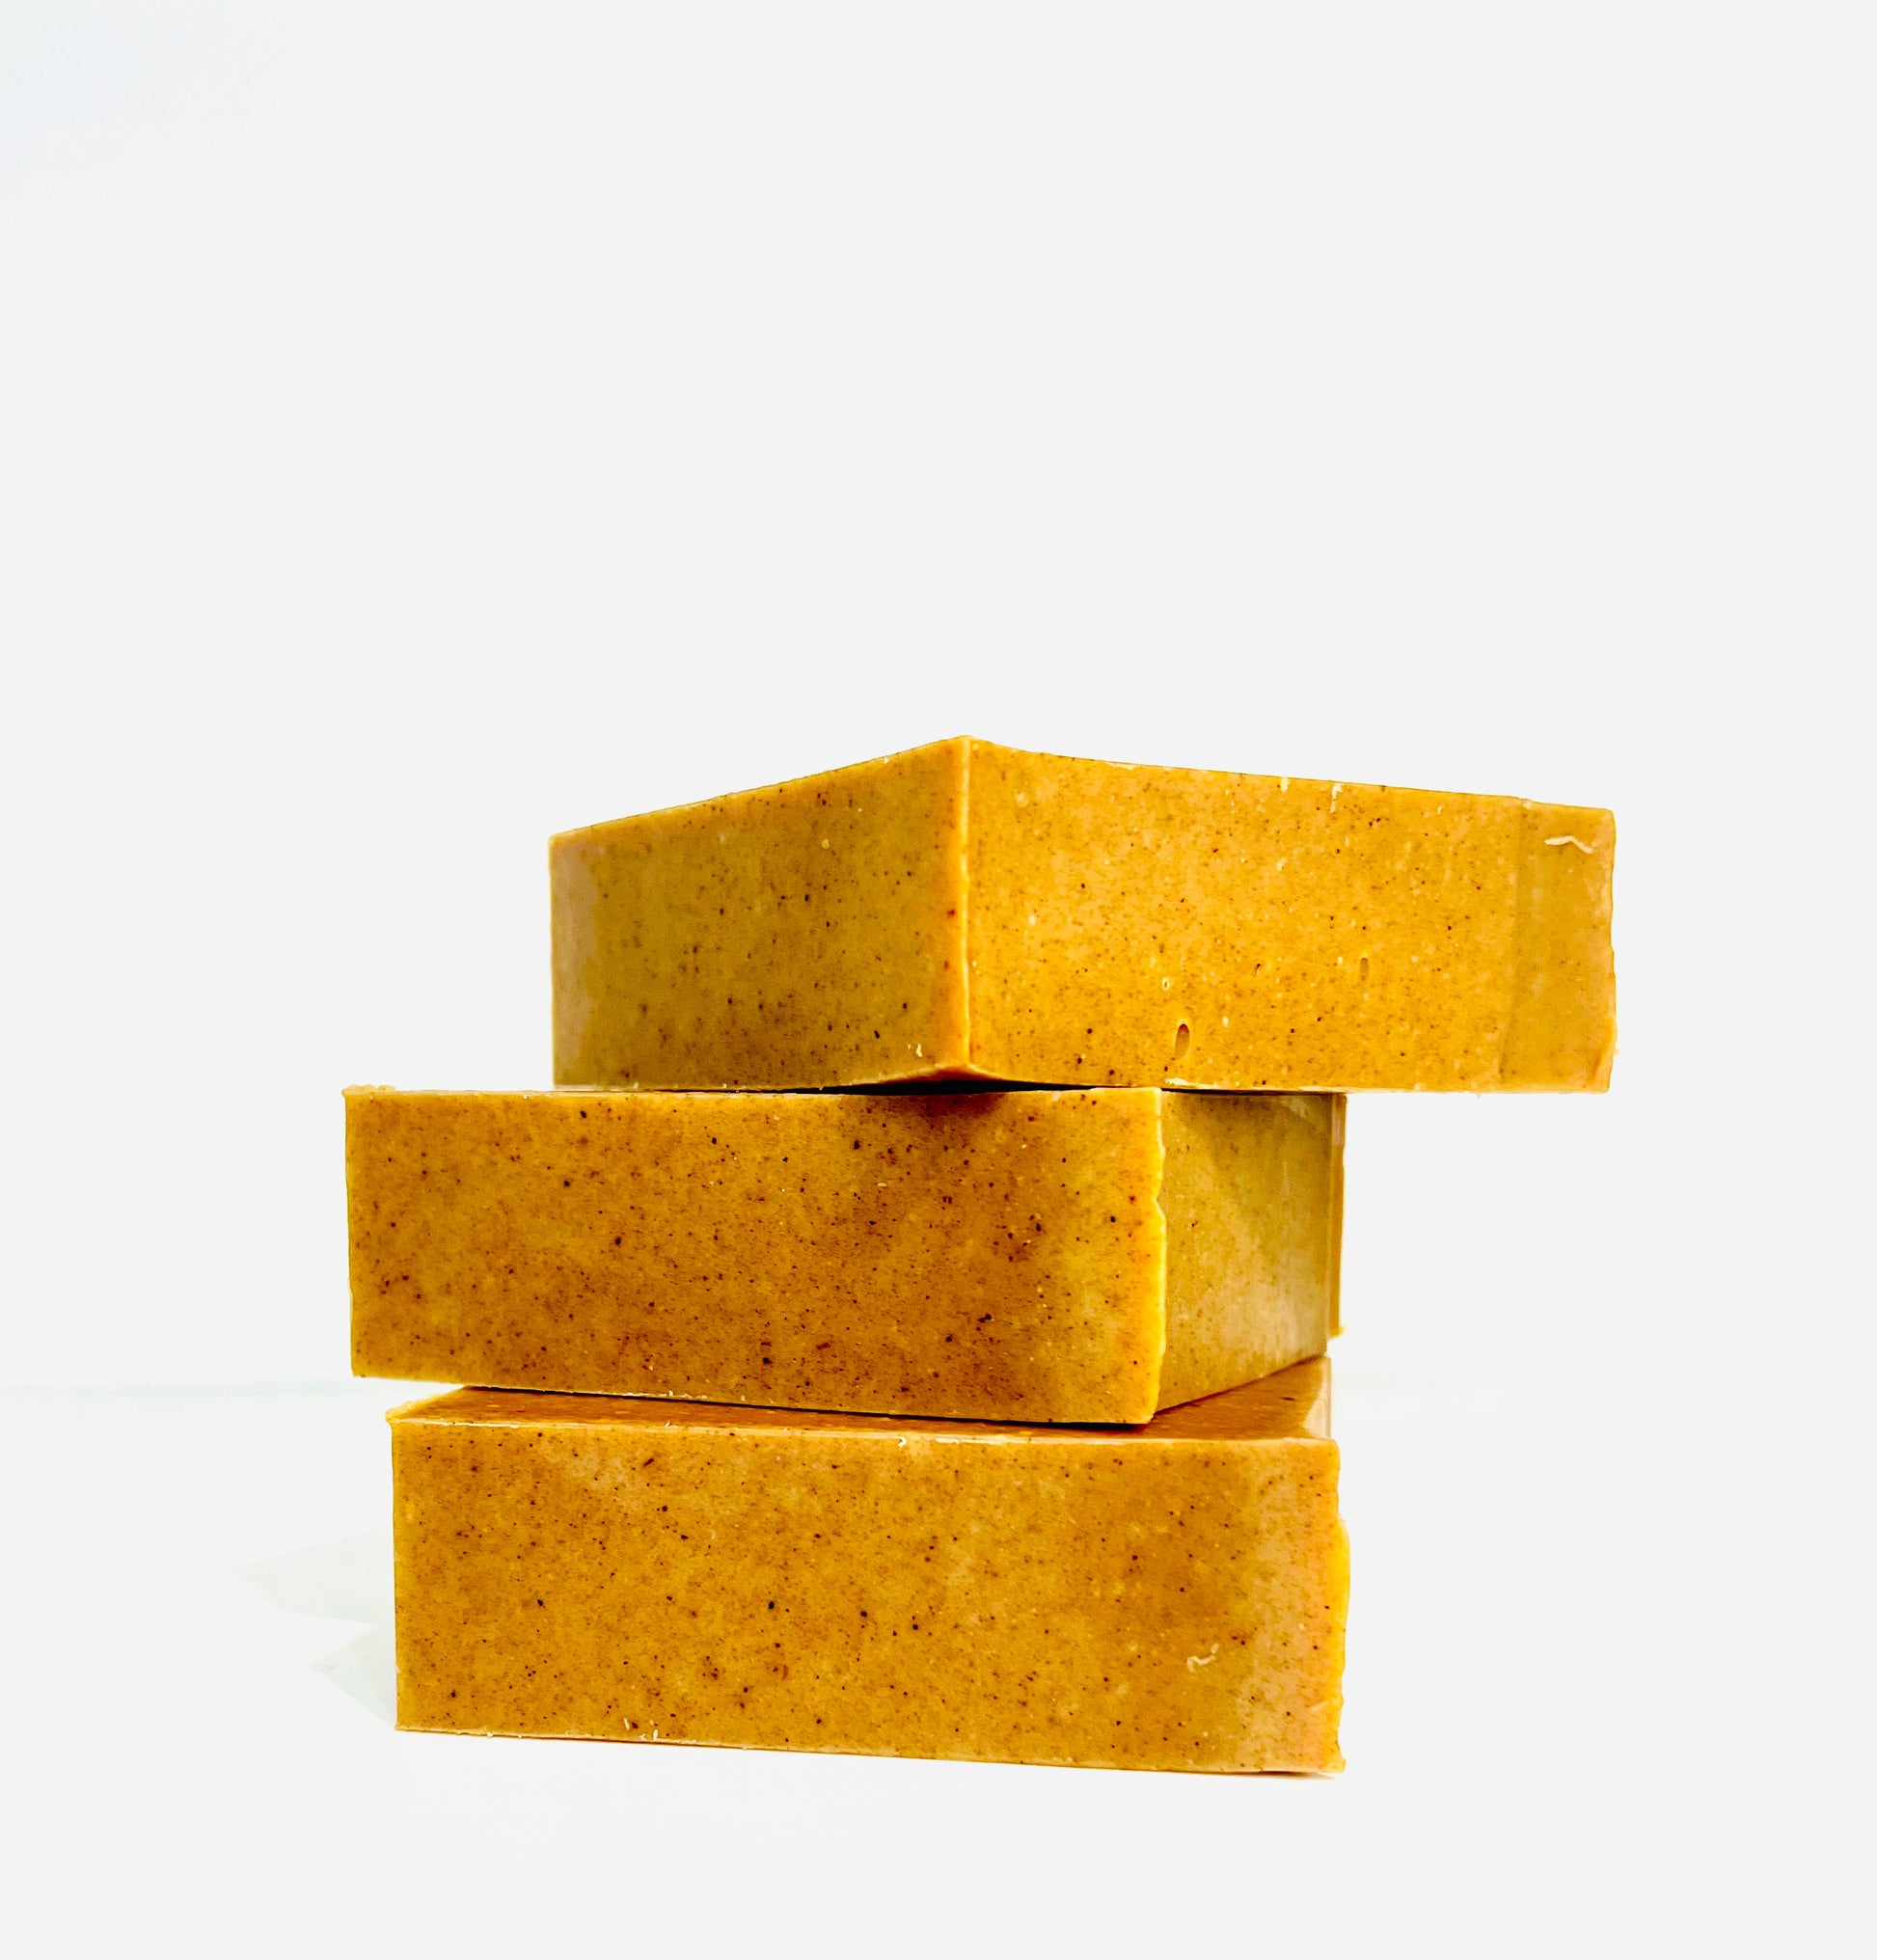 Turmeric Soap with Raw Honey - Arabel's Naturals 